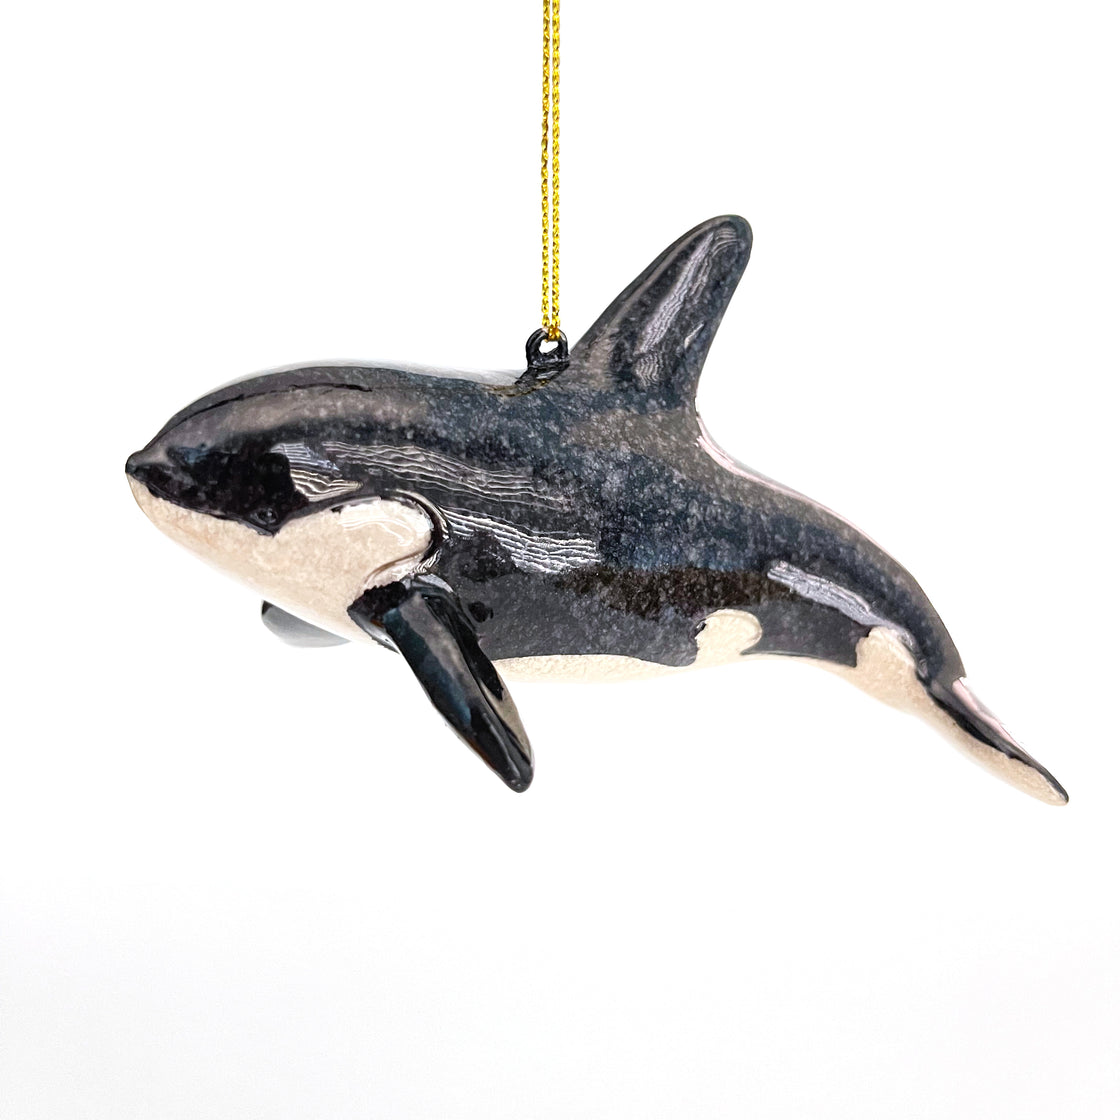 A hanging rengora Orca Killer Whale Christmas ornament set against a plain white backdrop